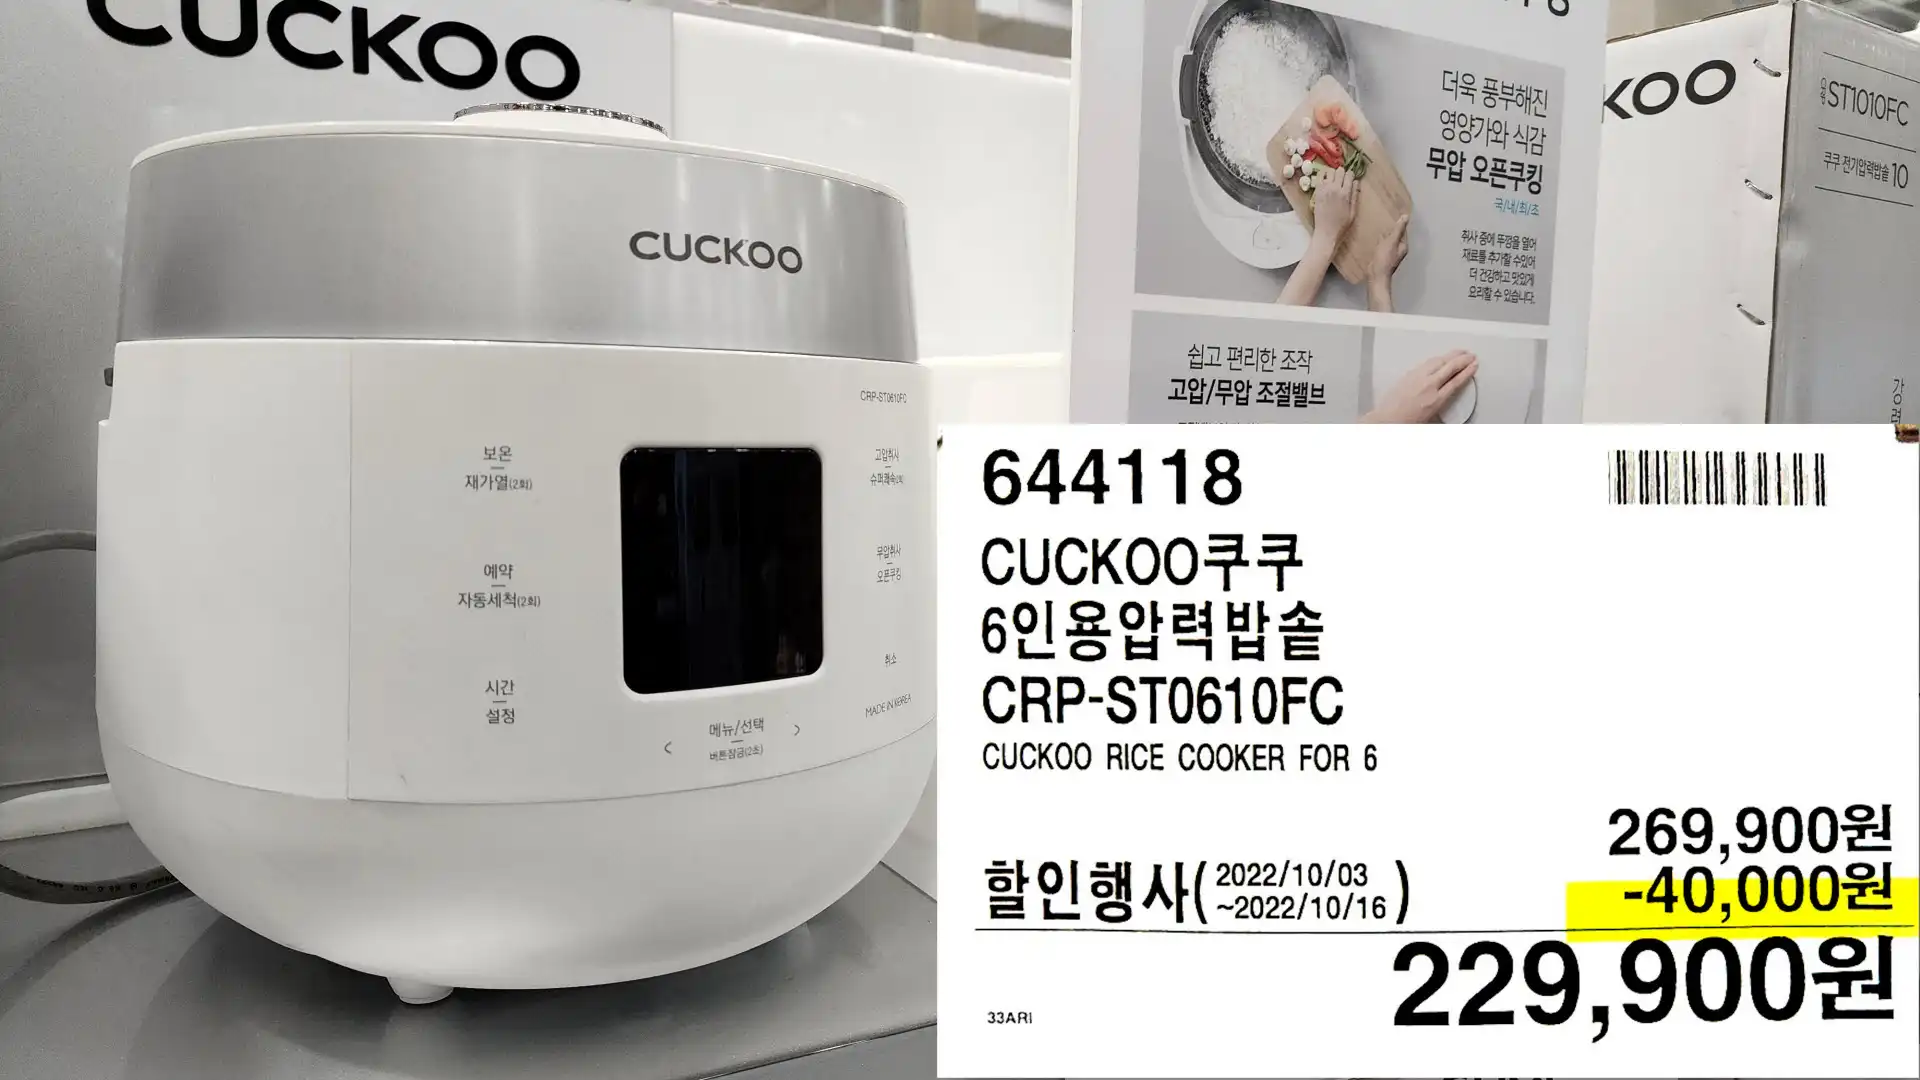 CUCKOO
6인용압력밥솥
CRP-ST0610FC
CUCKOO RICE COOKER FOR 6
229&#44;900원